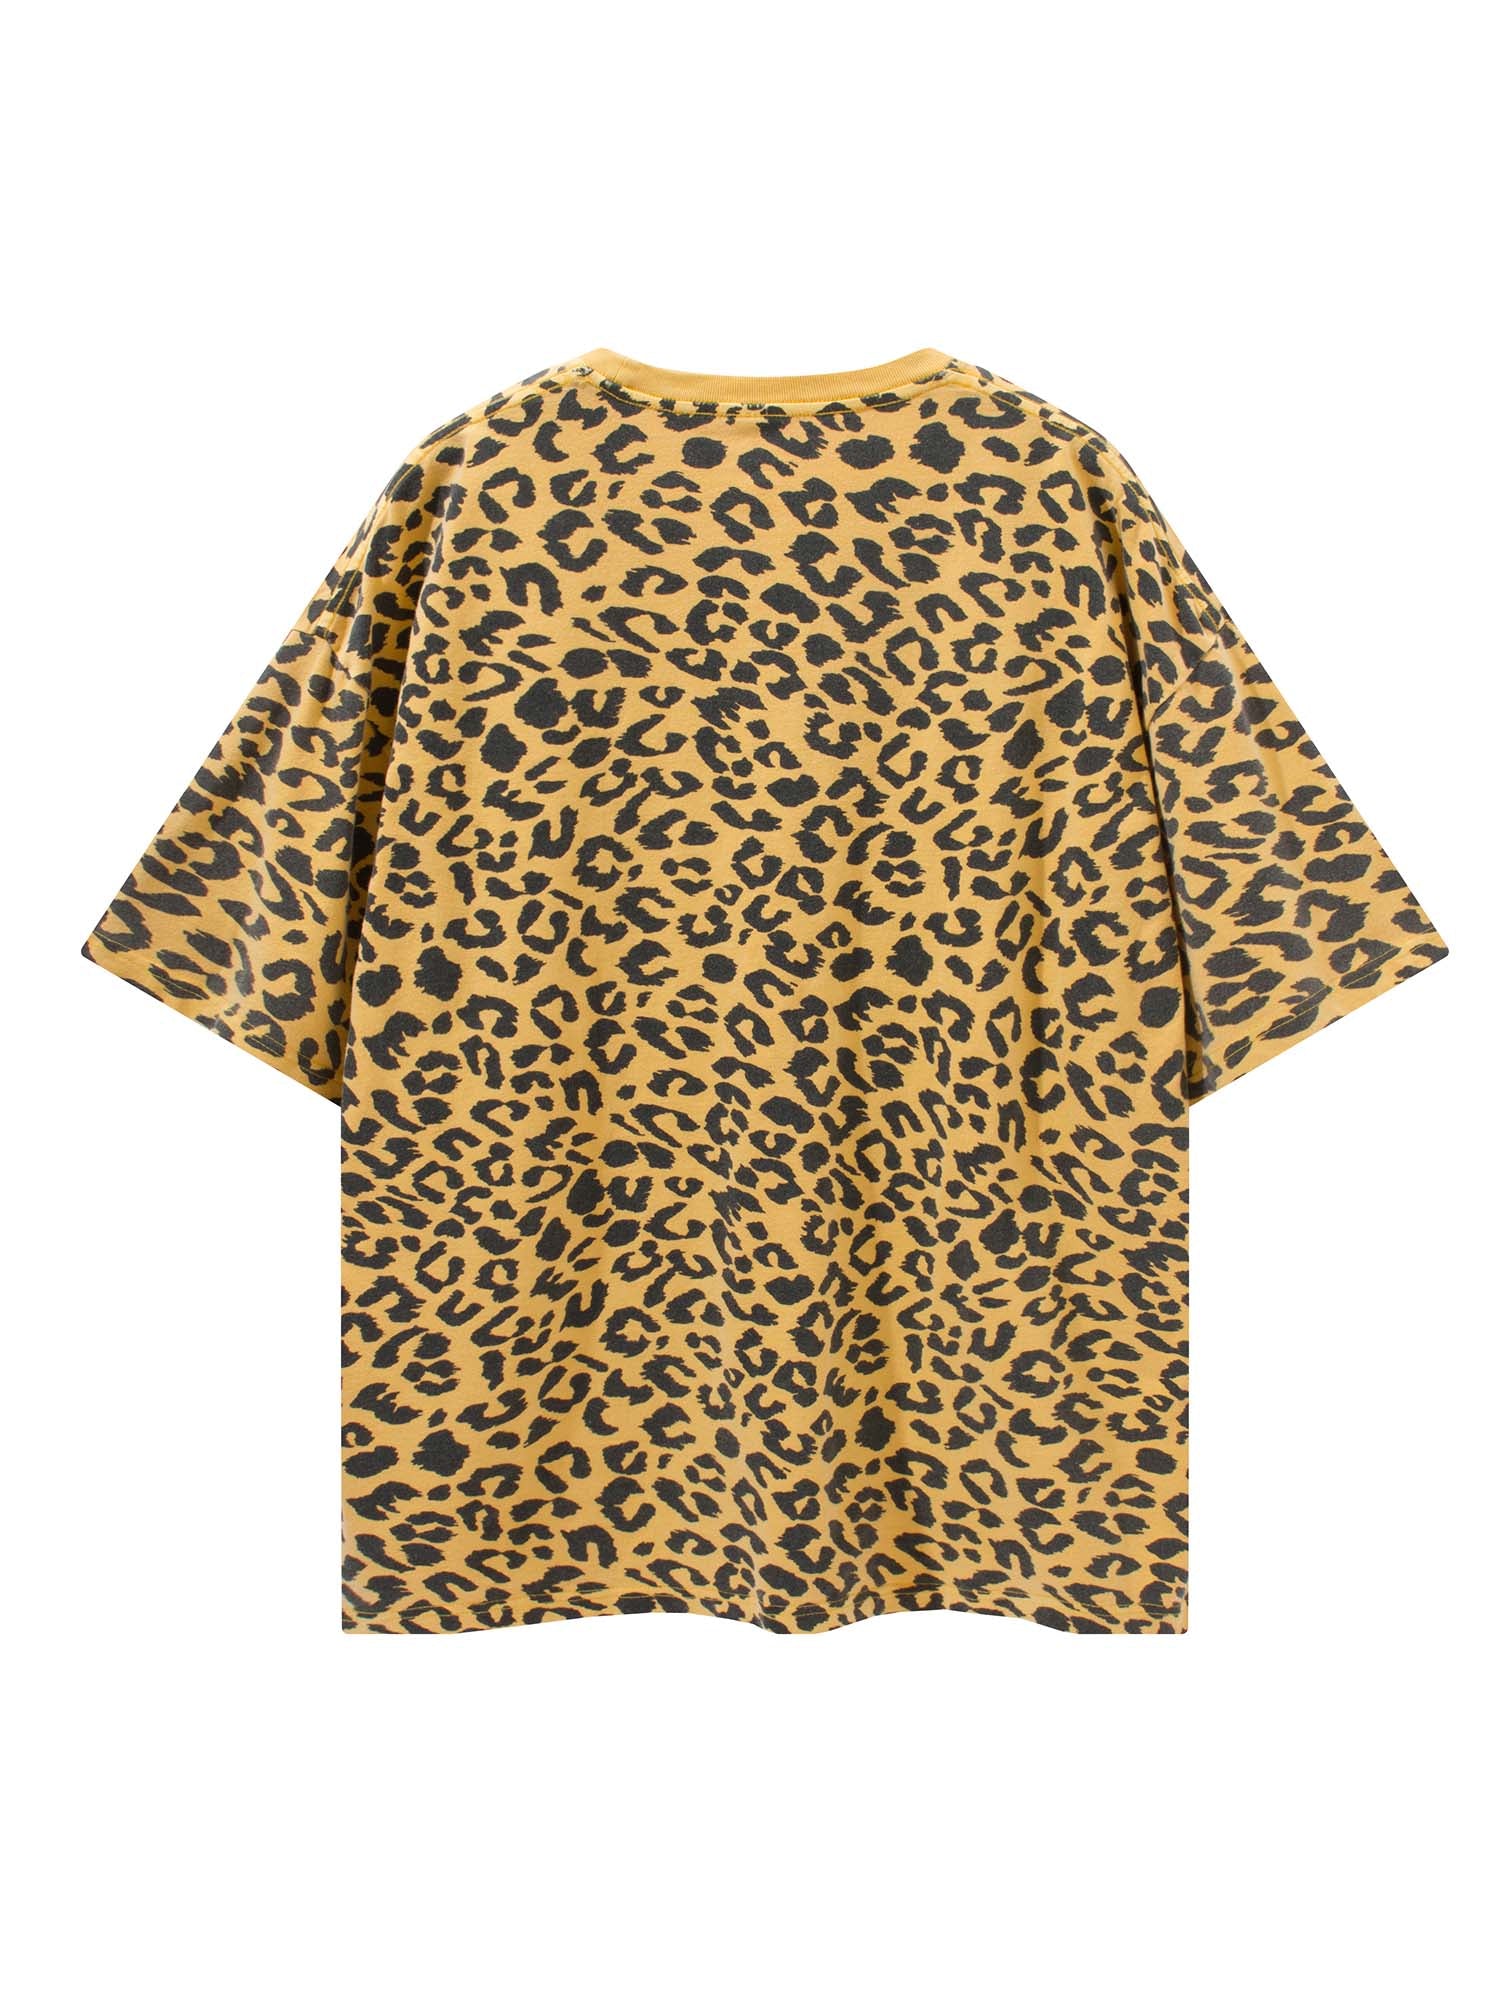 JUSTNOTAG Yellow leopard Print 100% Cotton Short Sleeve Tee